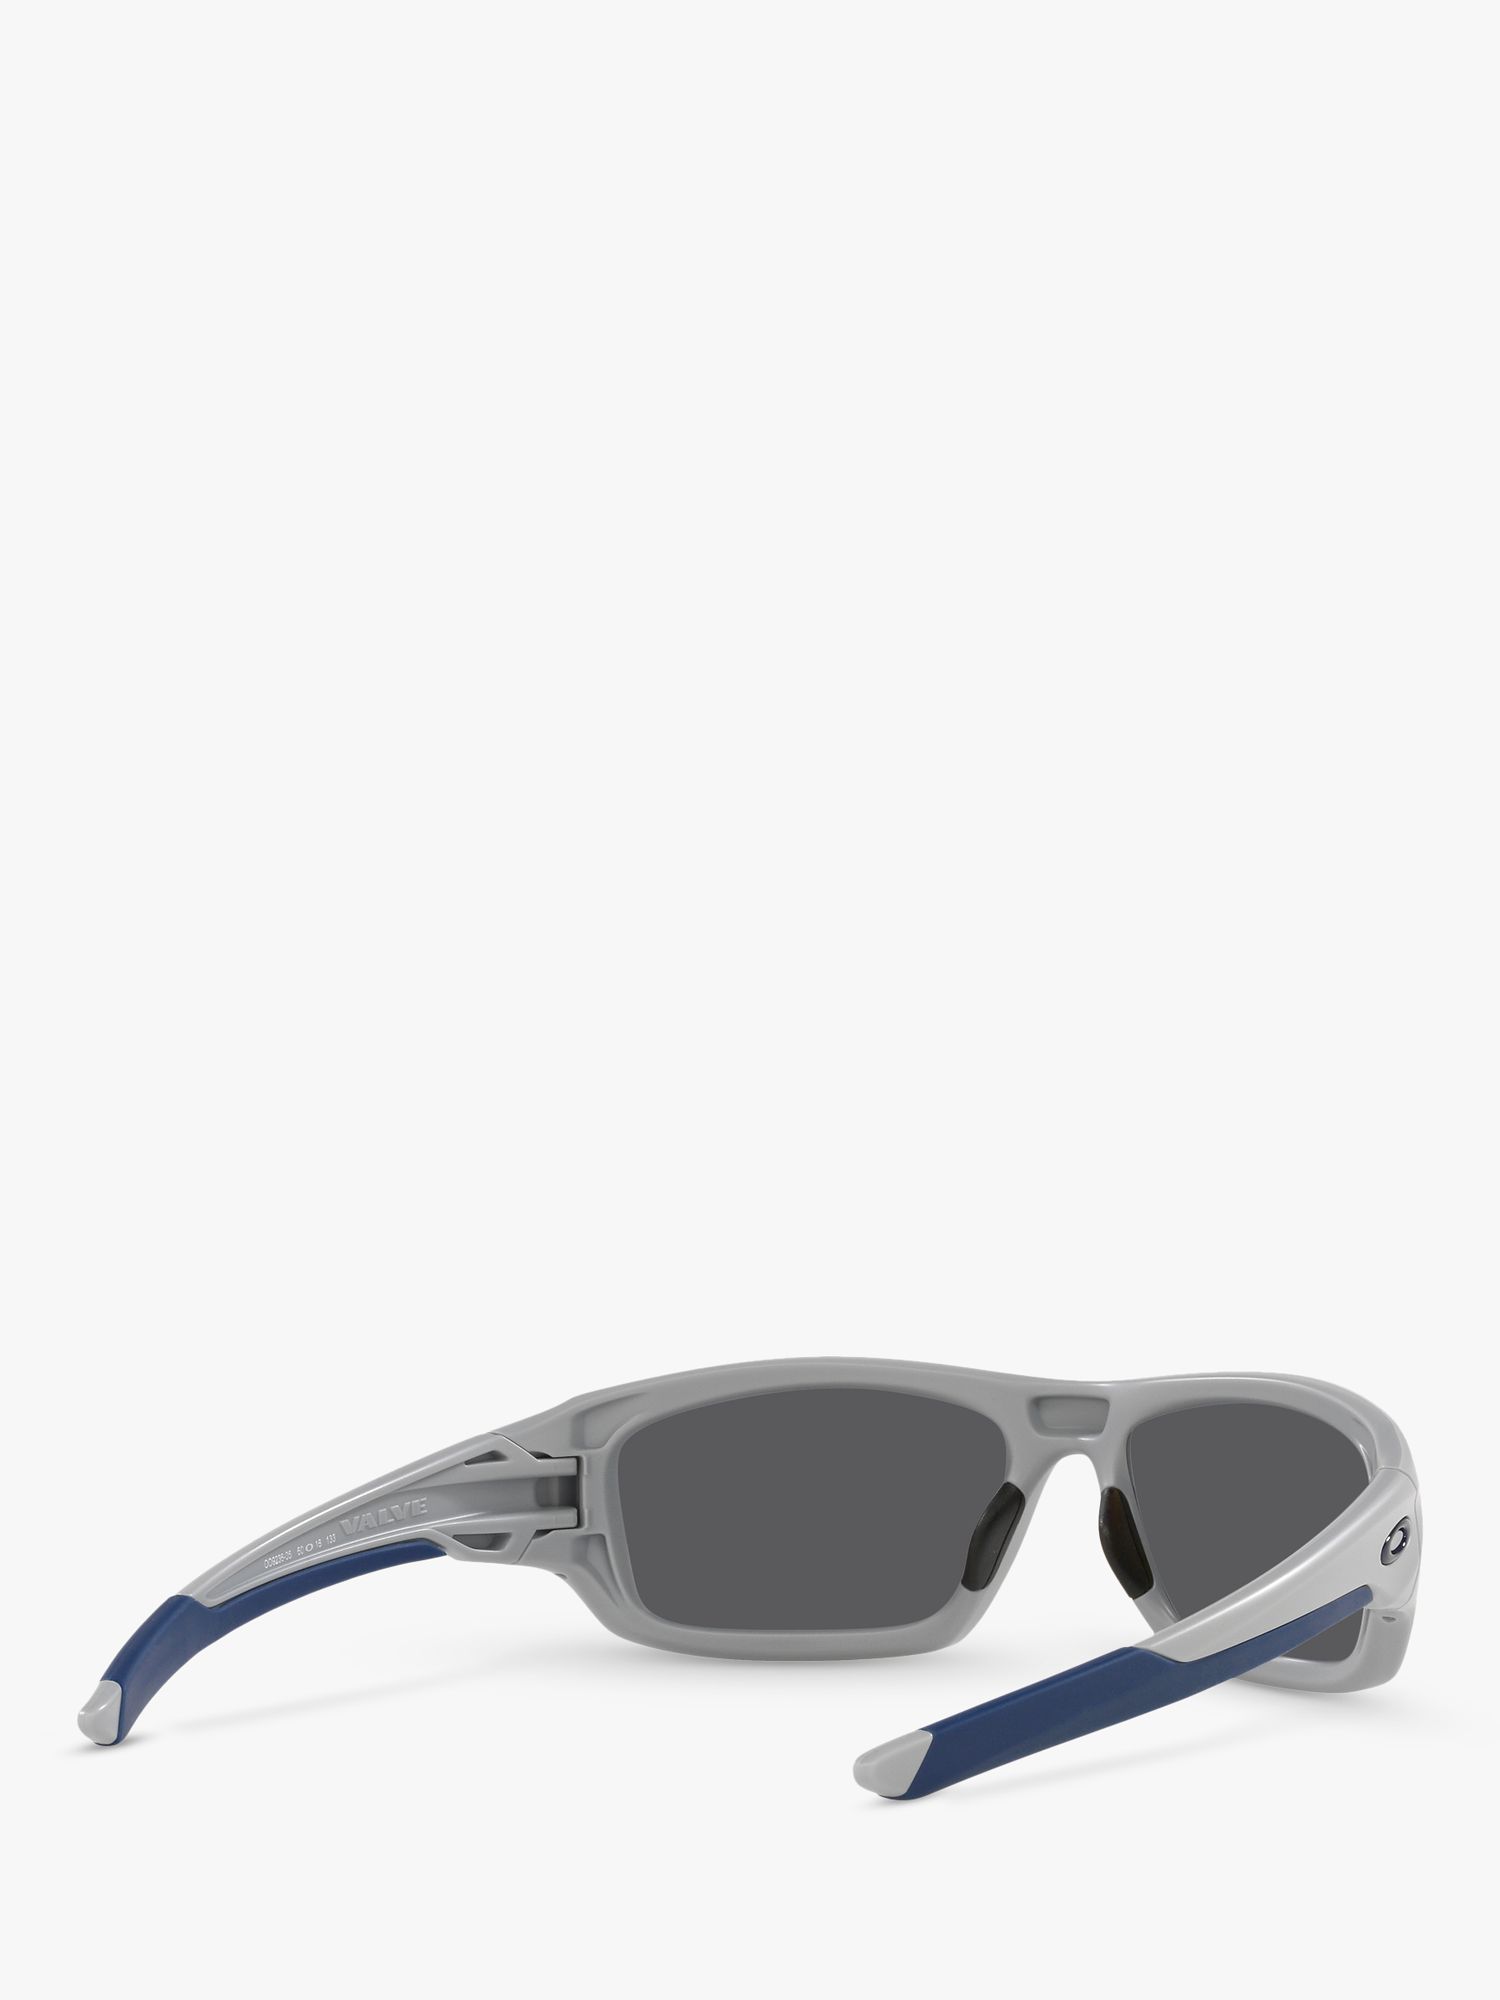 Oakley OO9236 Men's Valve Polarised Rectangular Sunglasses, Matte Fog/Grey